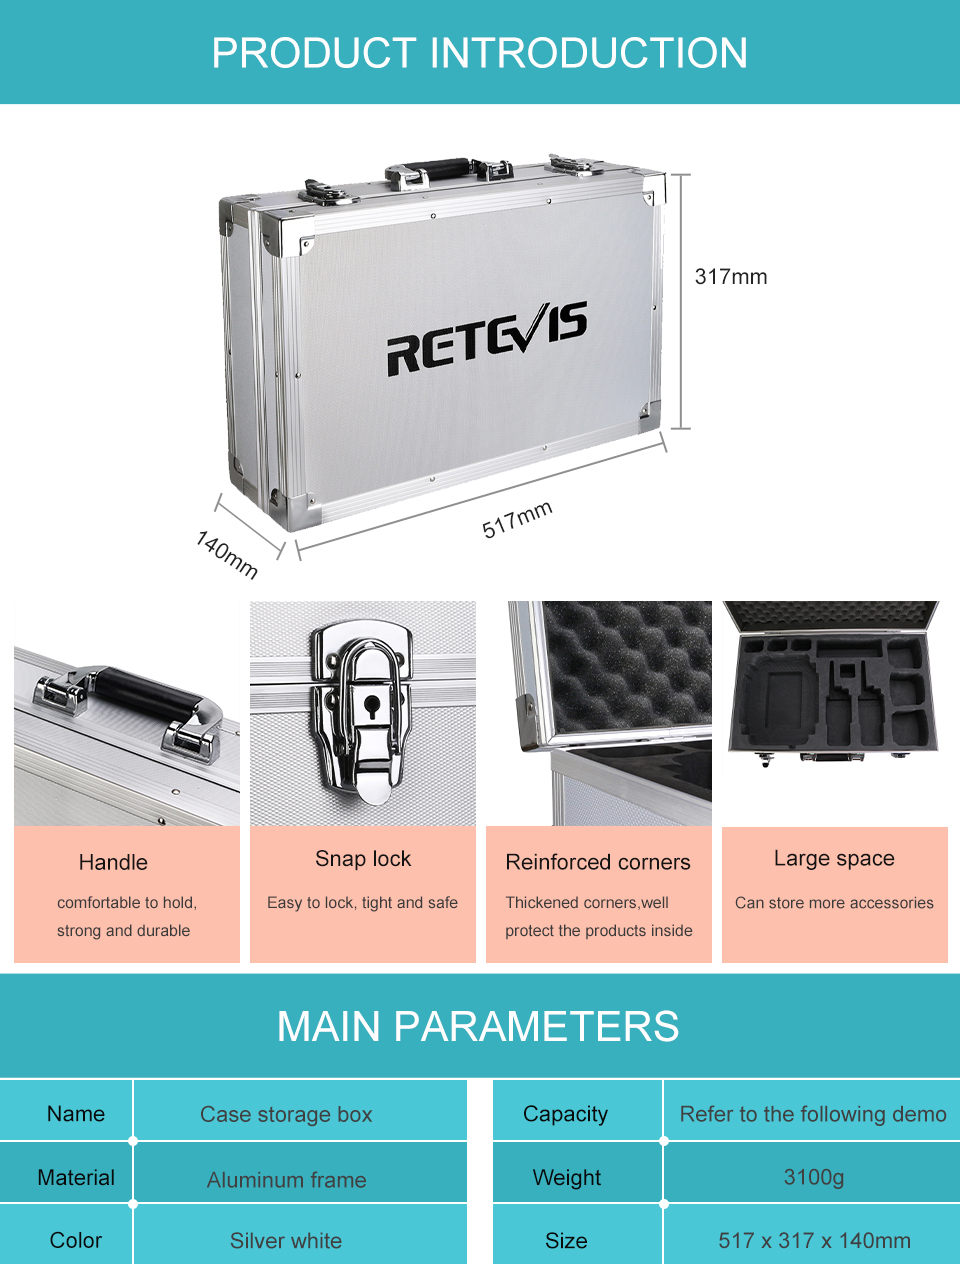 10 Km Communication Solution RETEVIS RT97 10W Repeater +5pcs Waterproof Radio RT29 +5M Feeder Cable + MA01 Antenna + Storage Box